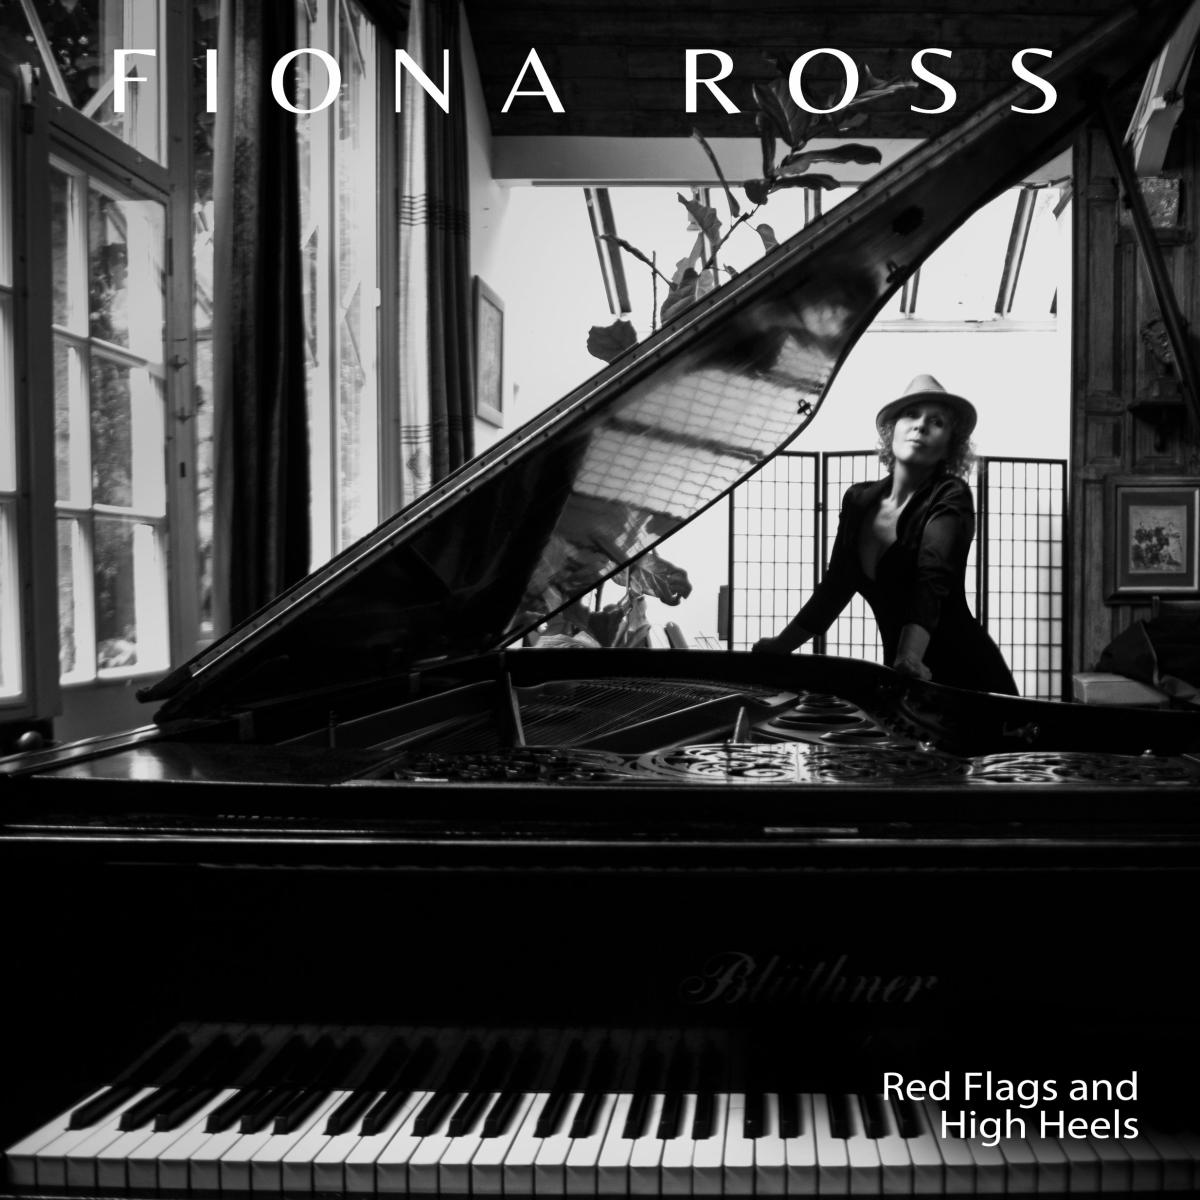 Fiona Ross